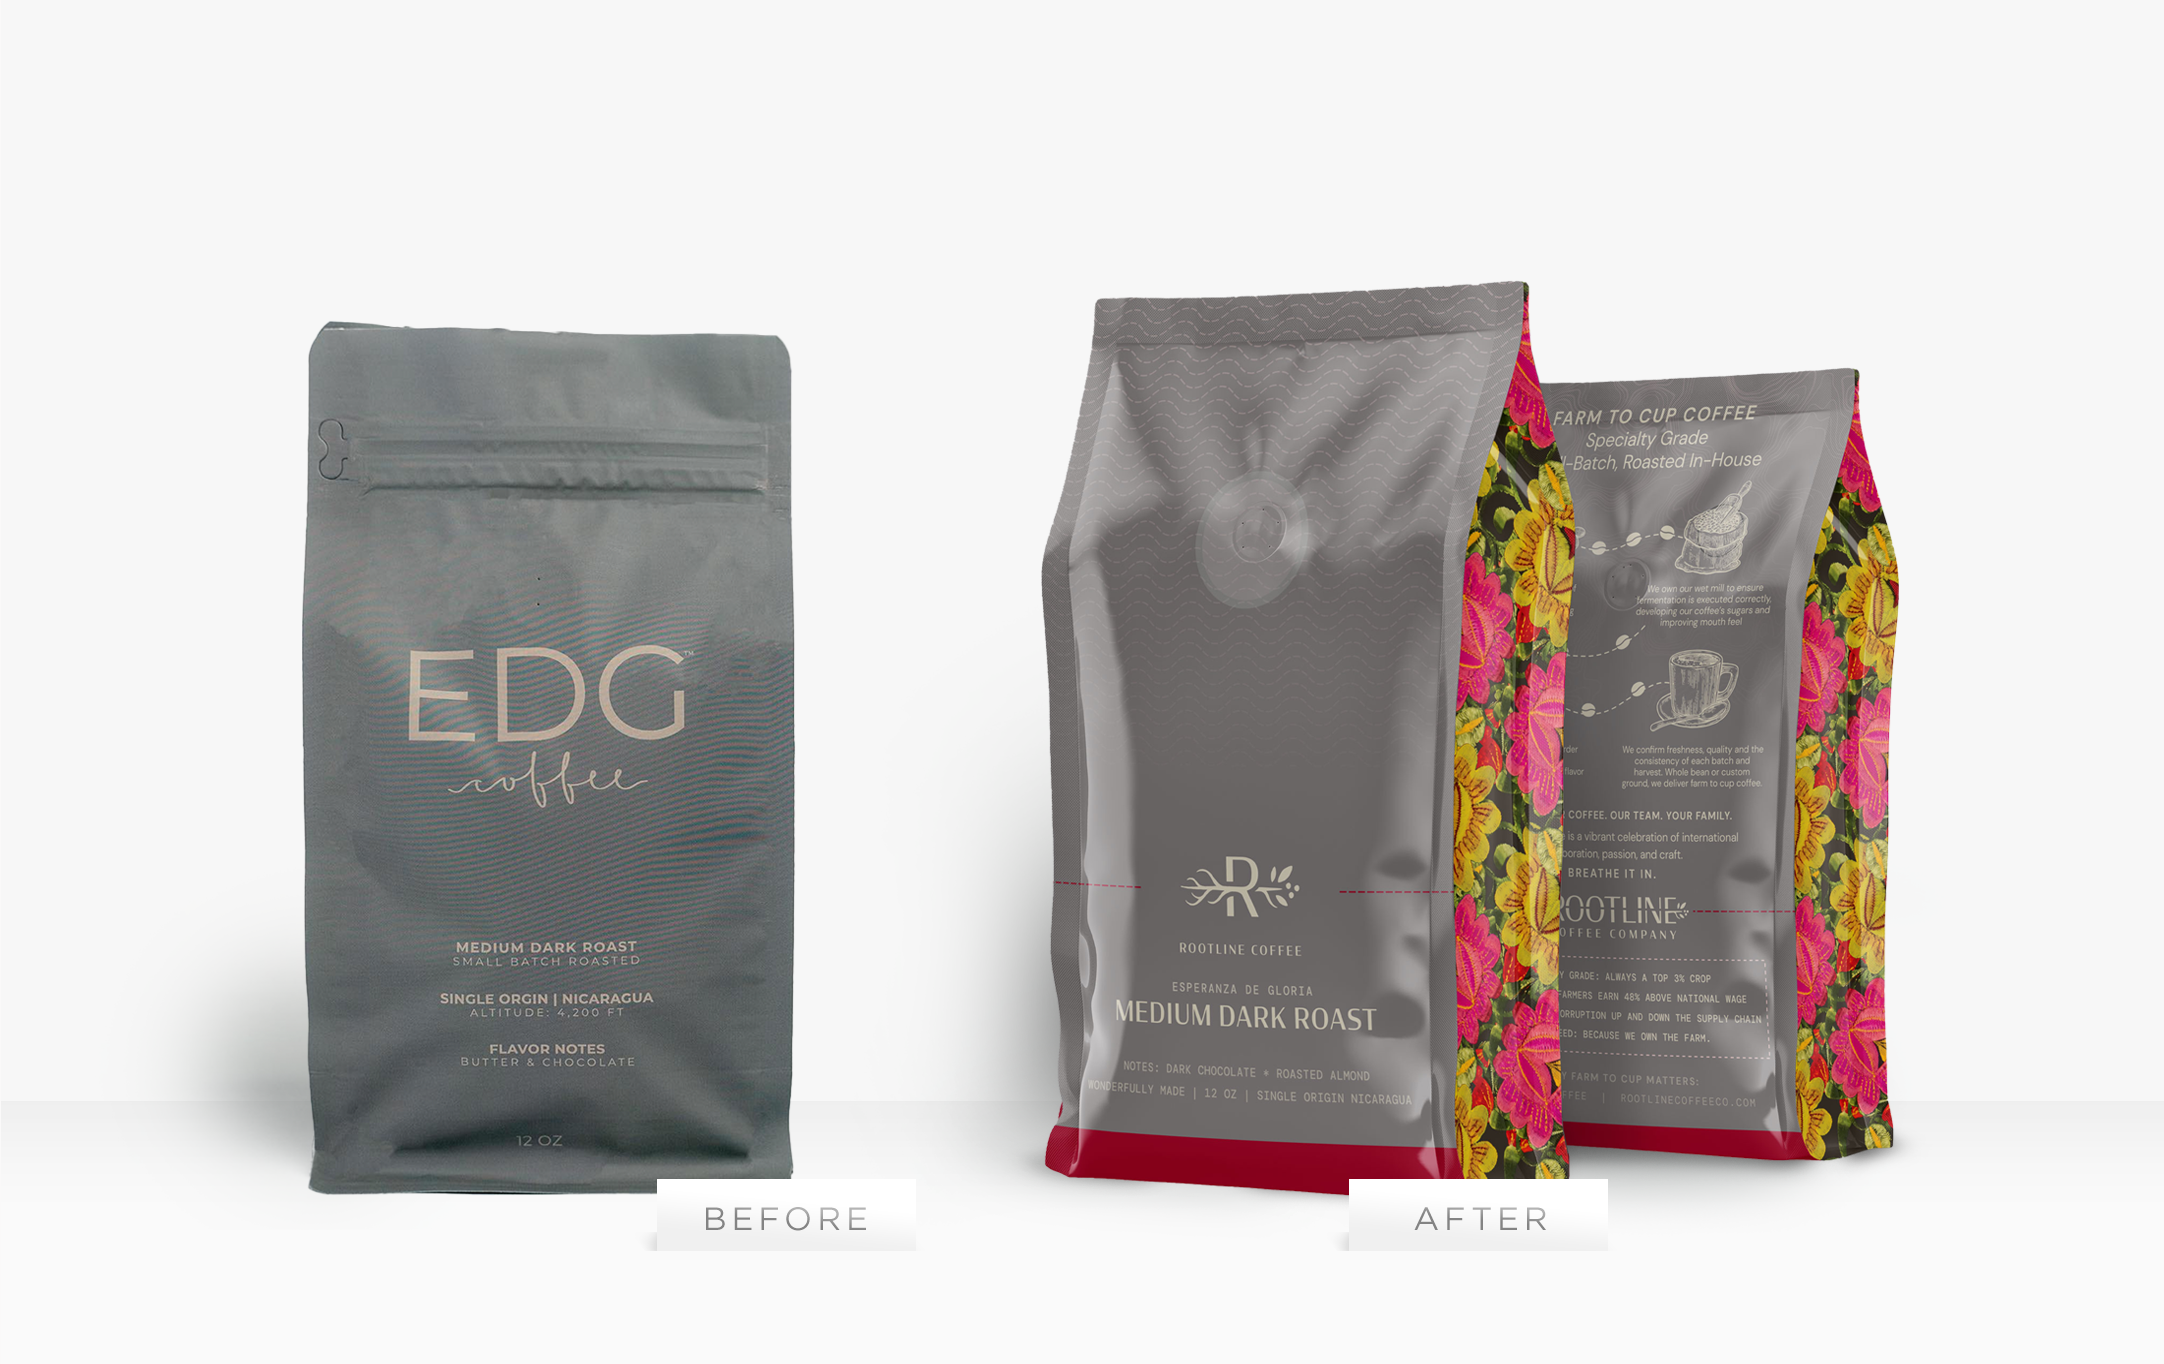 Rootline Medium Dark Roast Coffee Bag Design - Before and After